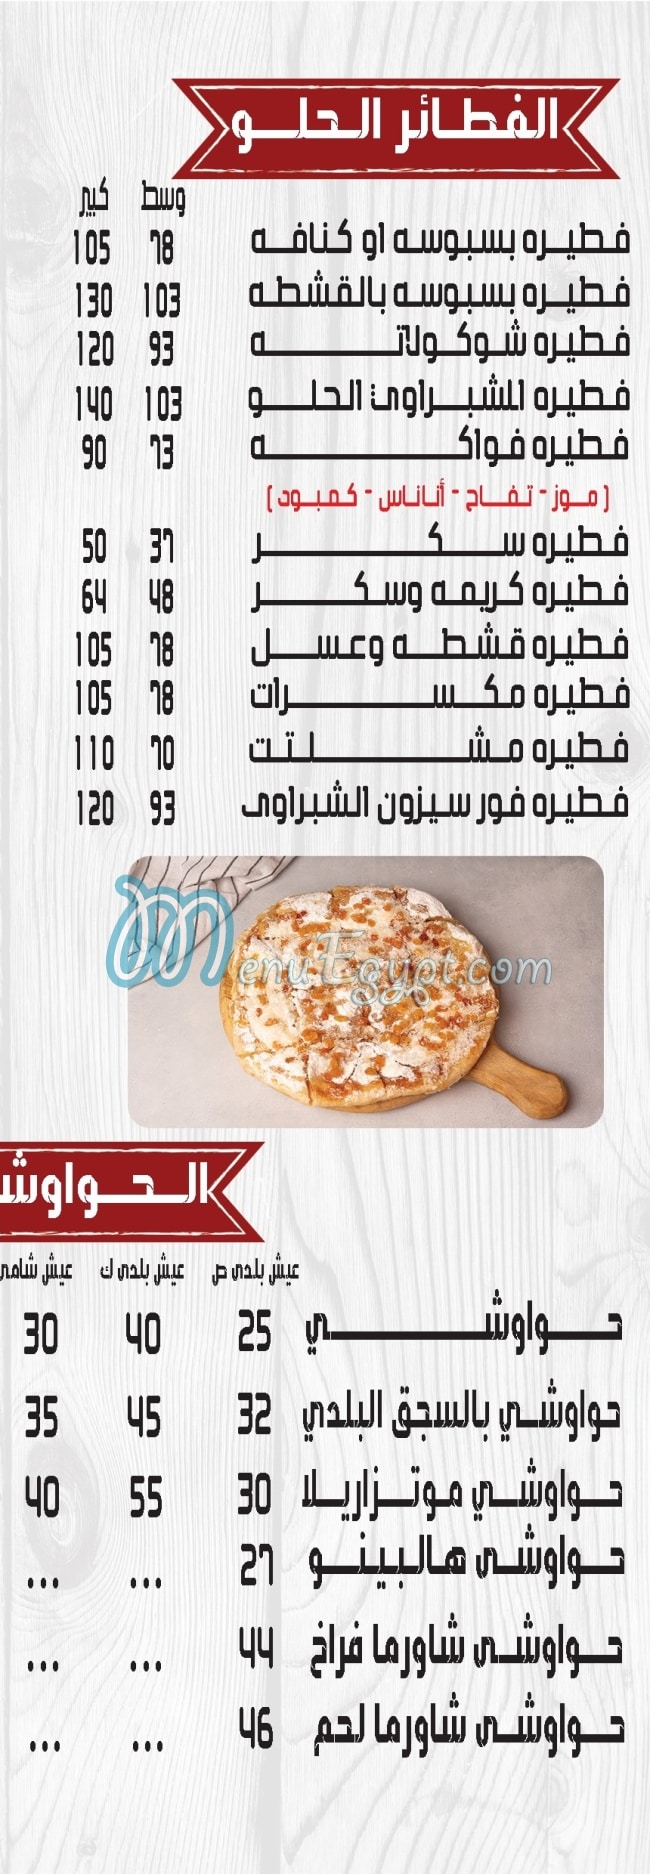 Elshabrawy Maadi menu Egypt 2